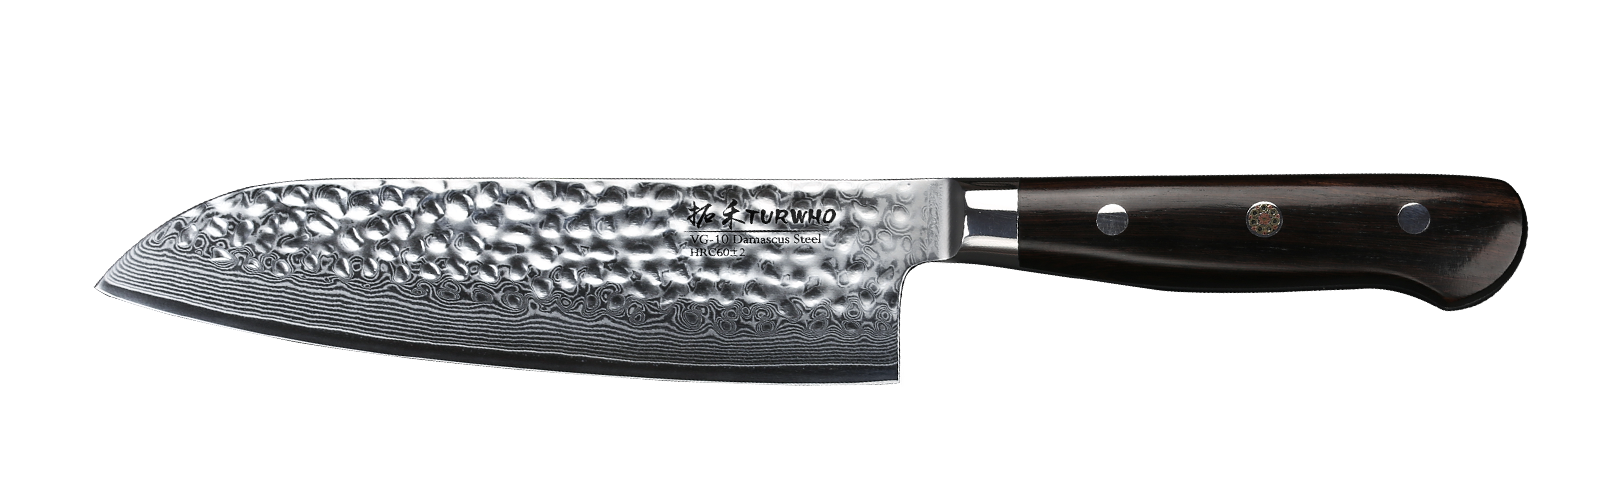 TURWHO Professional Santoku Knife,7-inch Japanese Chef Knife 67